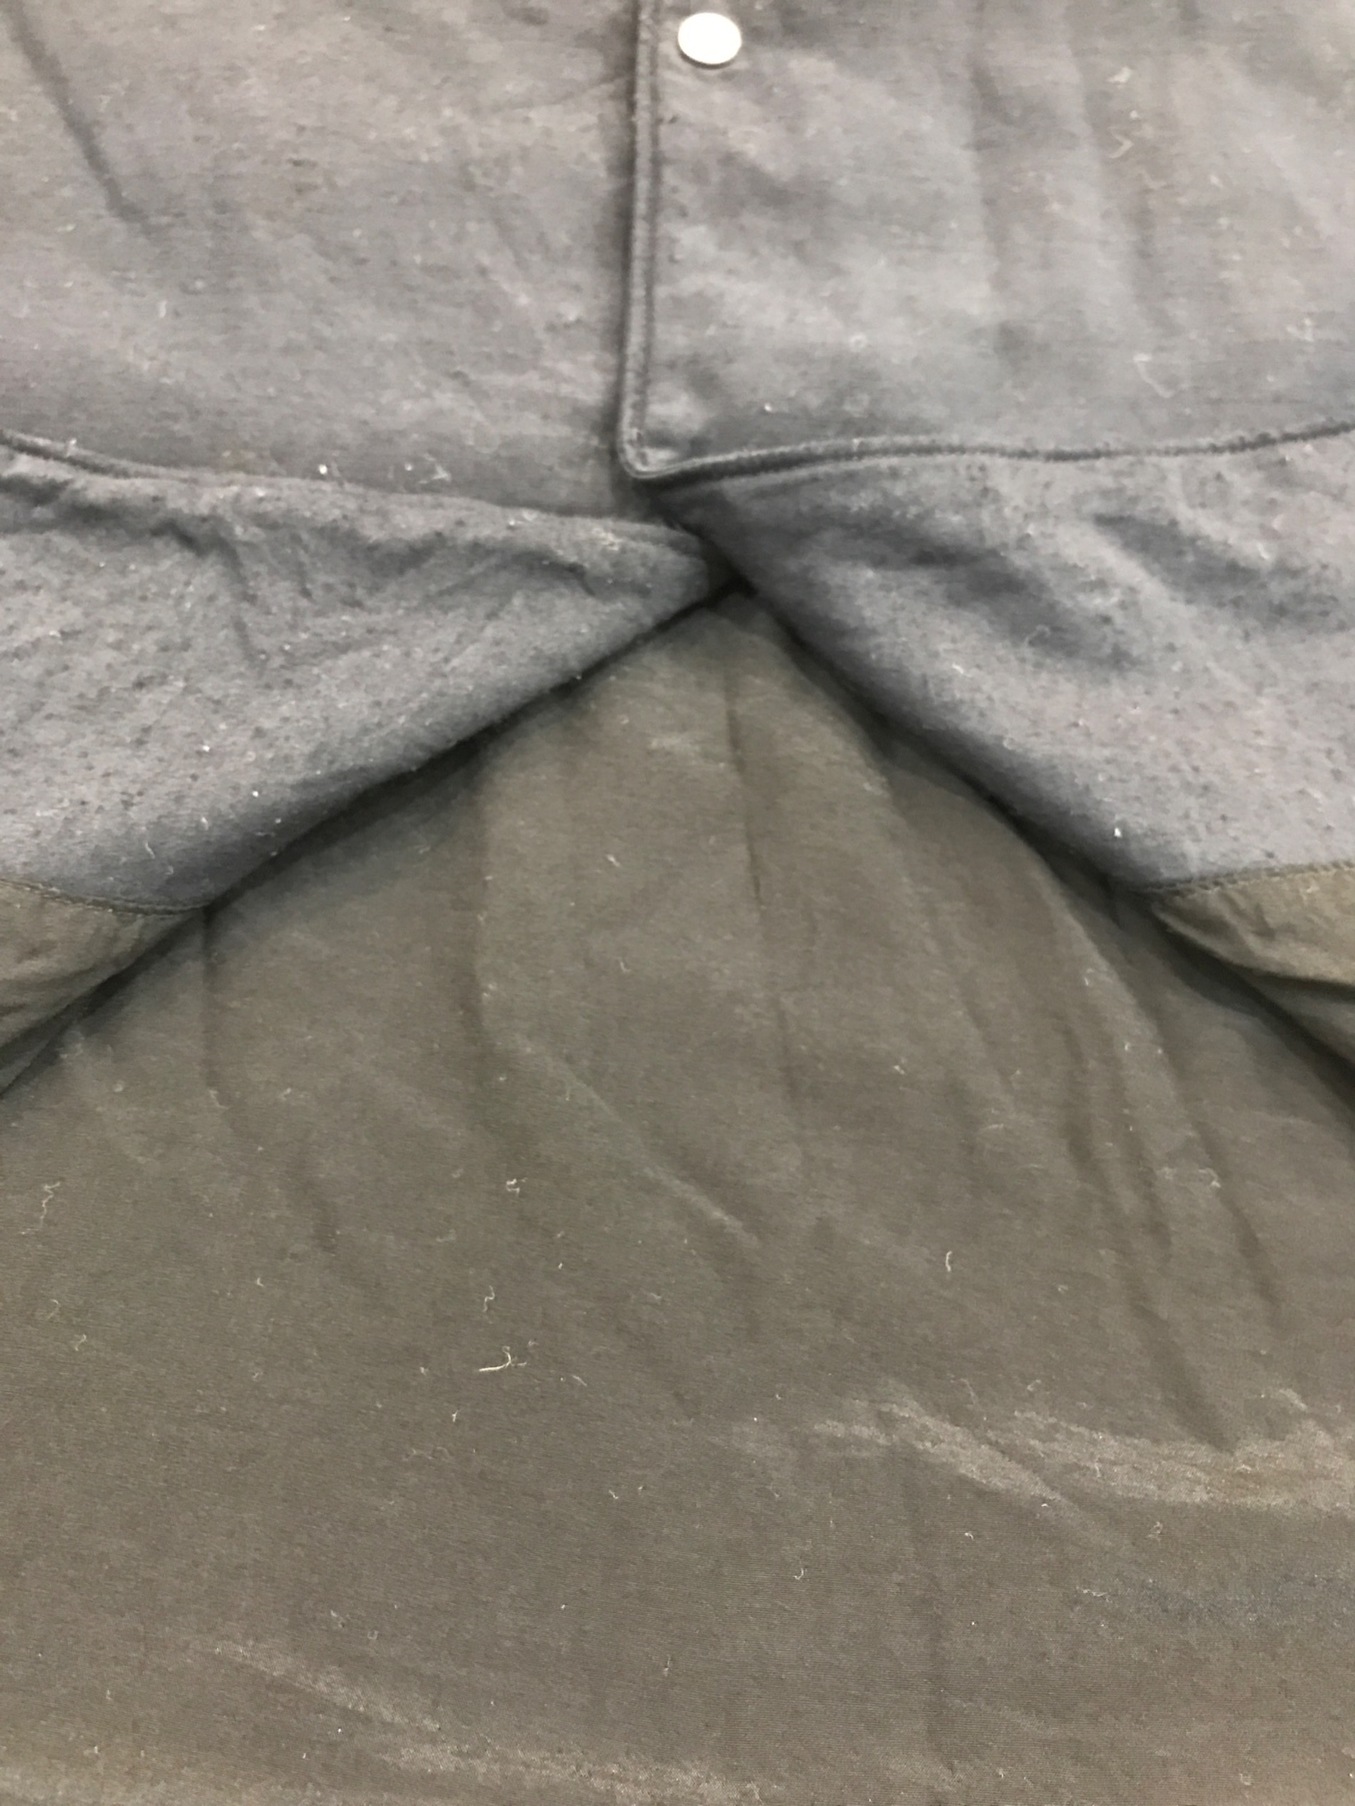 COMOLI (コモリ) ナイロンシルク中綿 シャツジャケット ネイビー サイズ:2